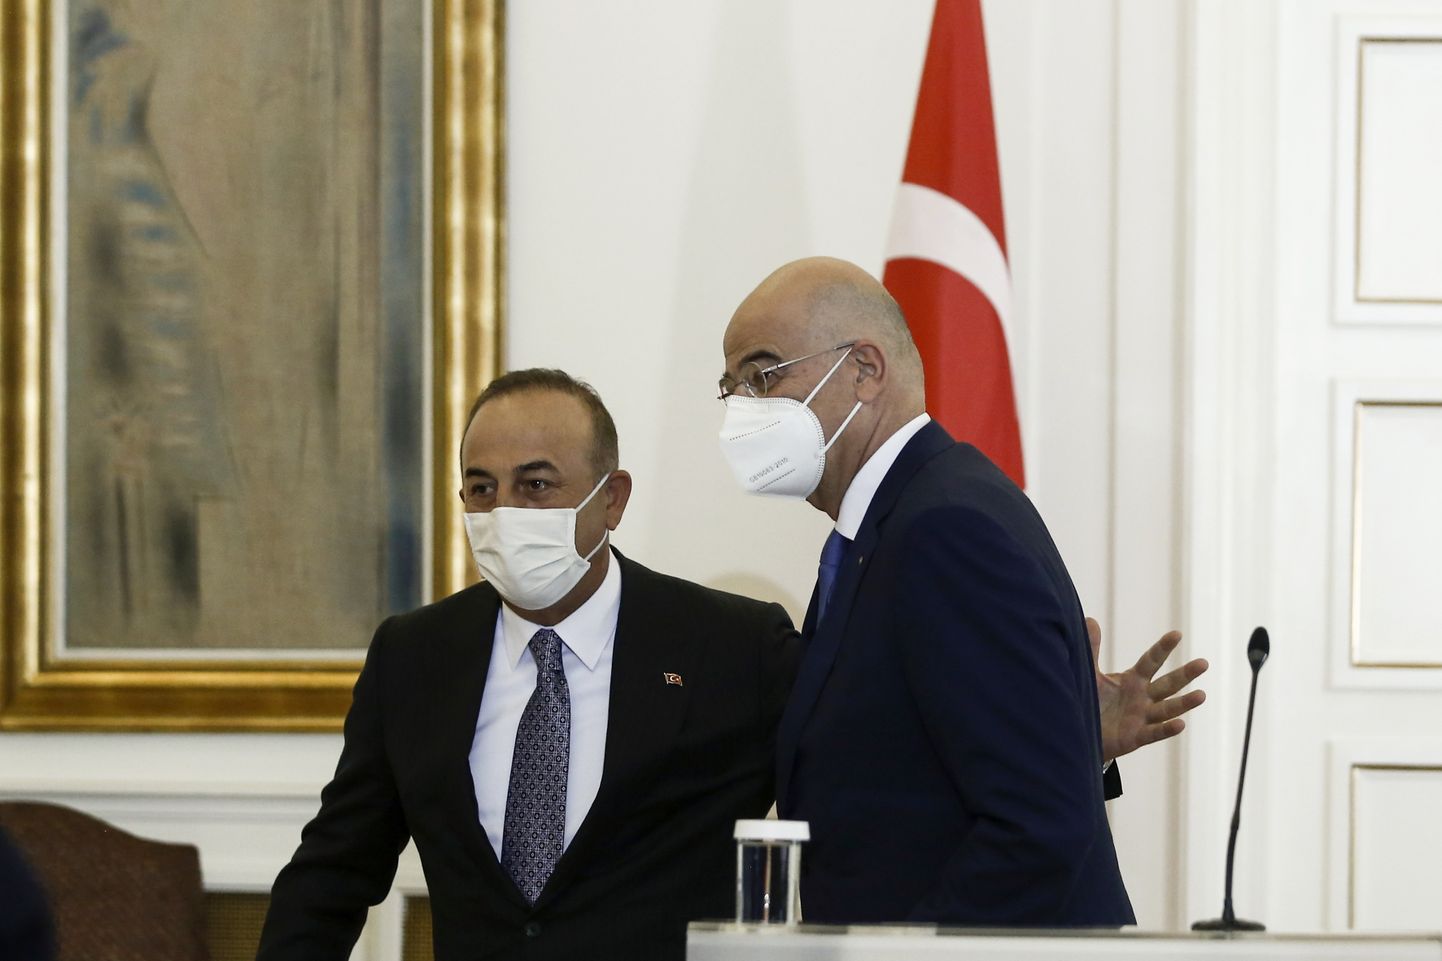 Kreeka välisminister Nikos Dendias (paremal) ja tema Türgi kolleeg Mevlüt Çavuşoğlu.